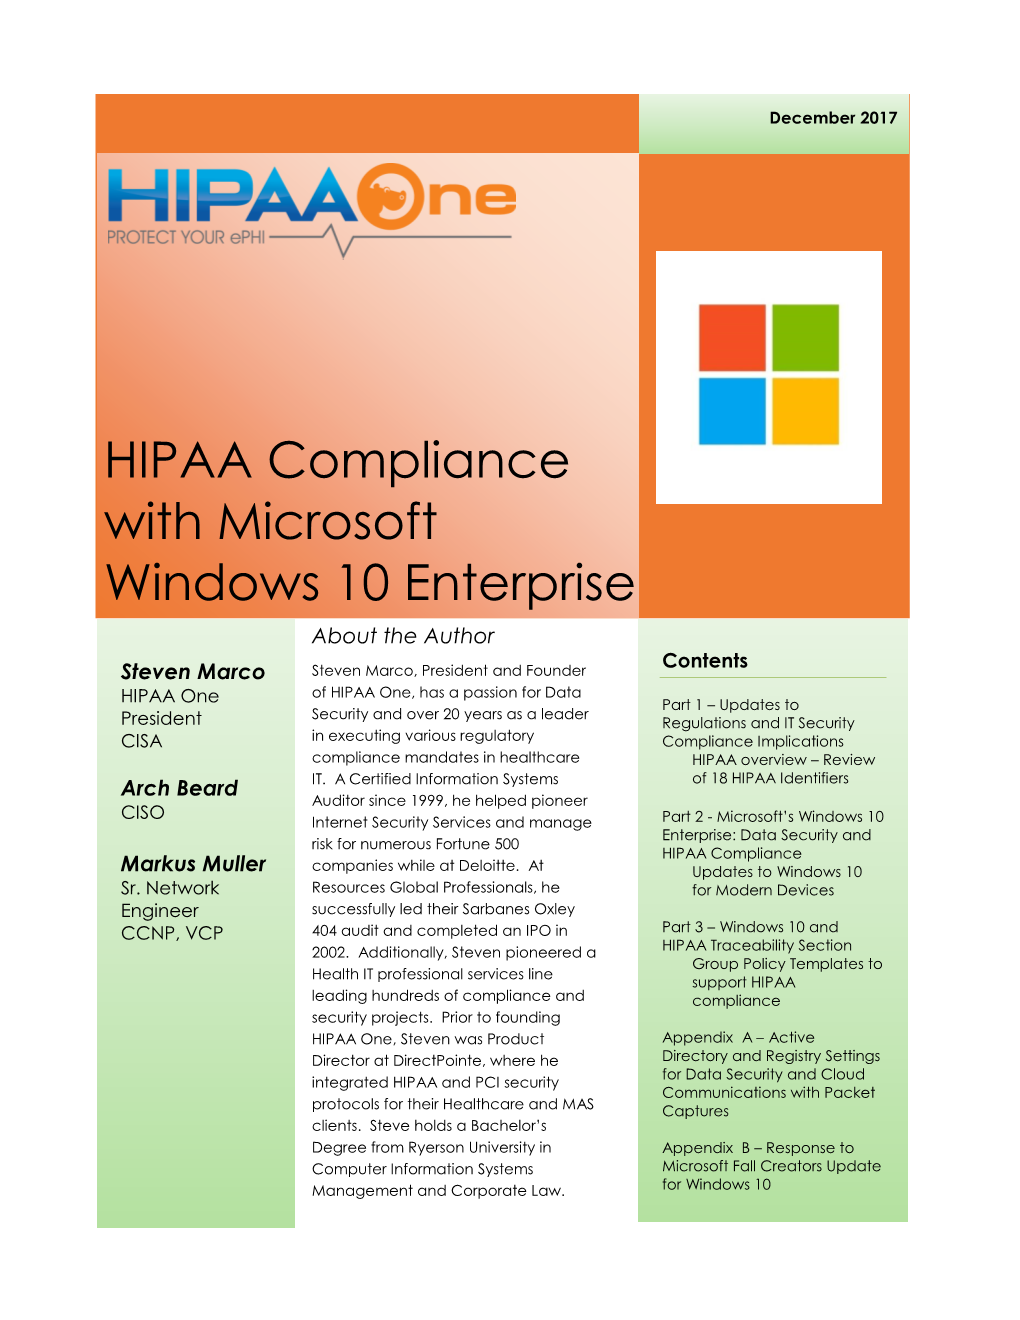 HIPAA Compliance with Microsoft Windows 10 Enterprise